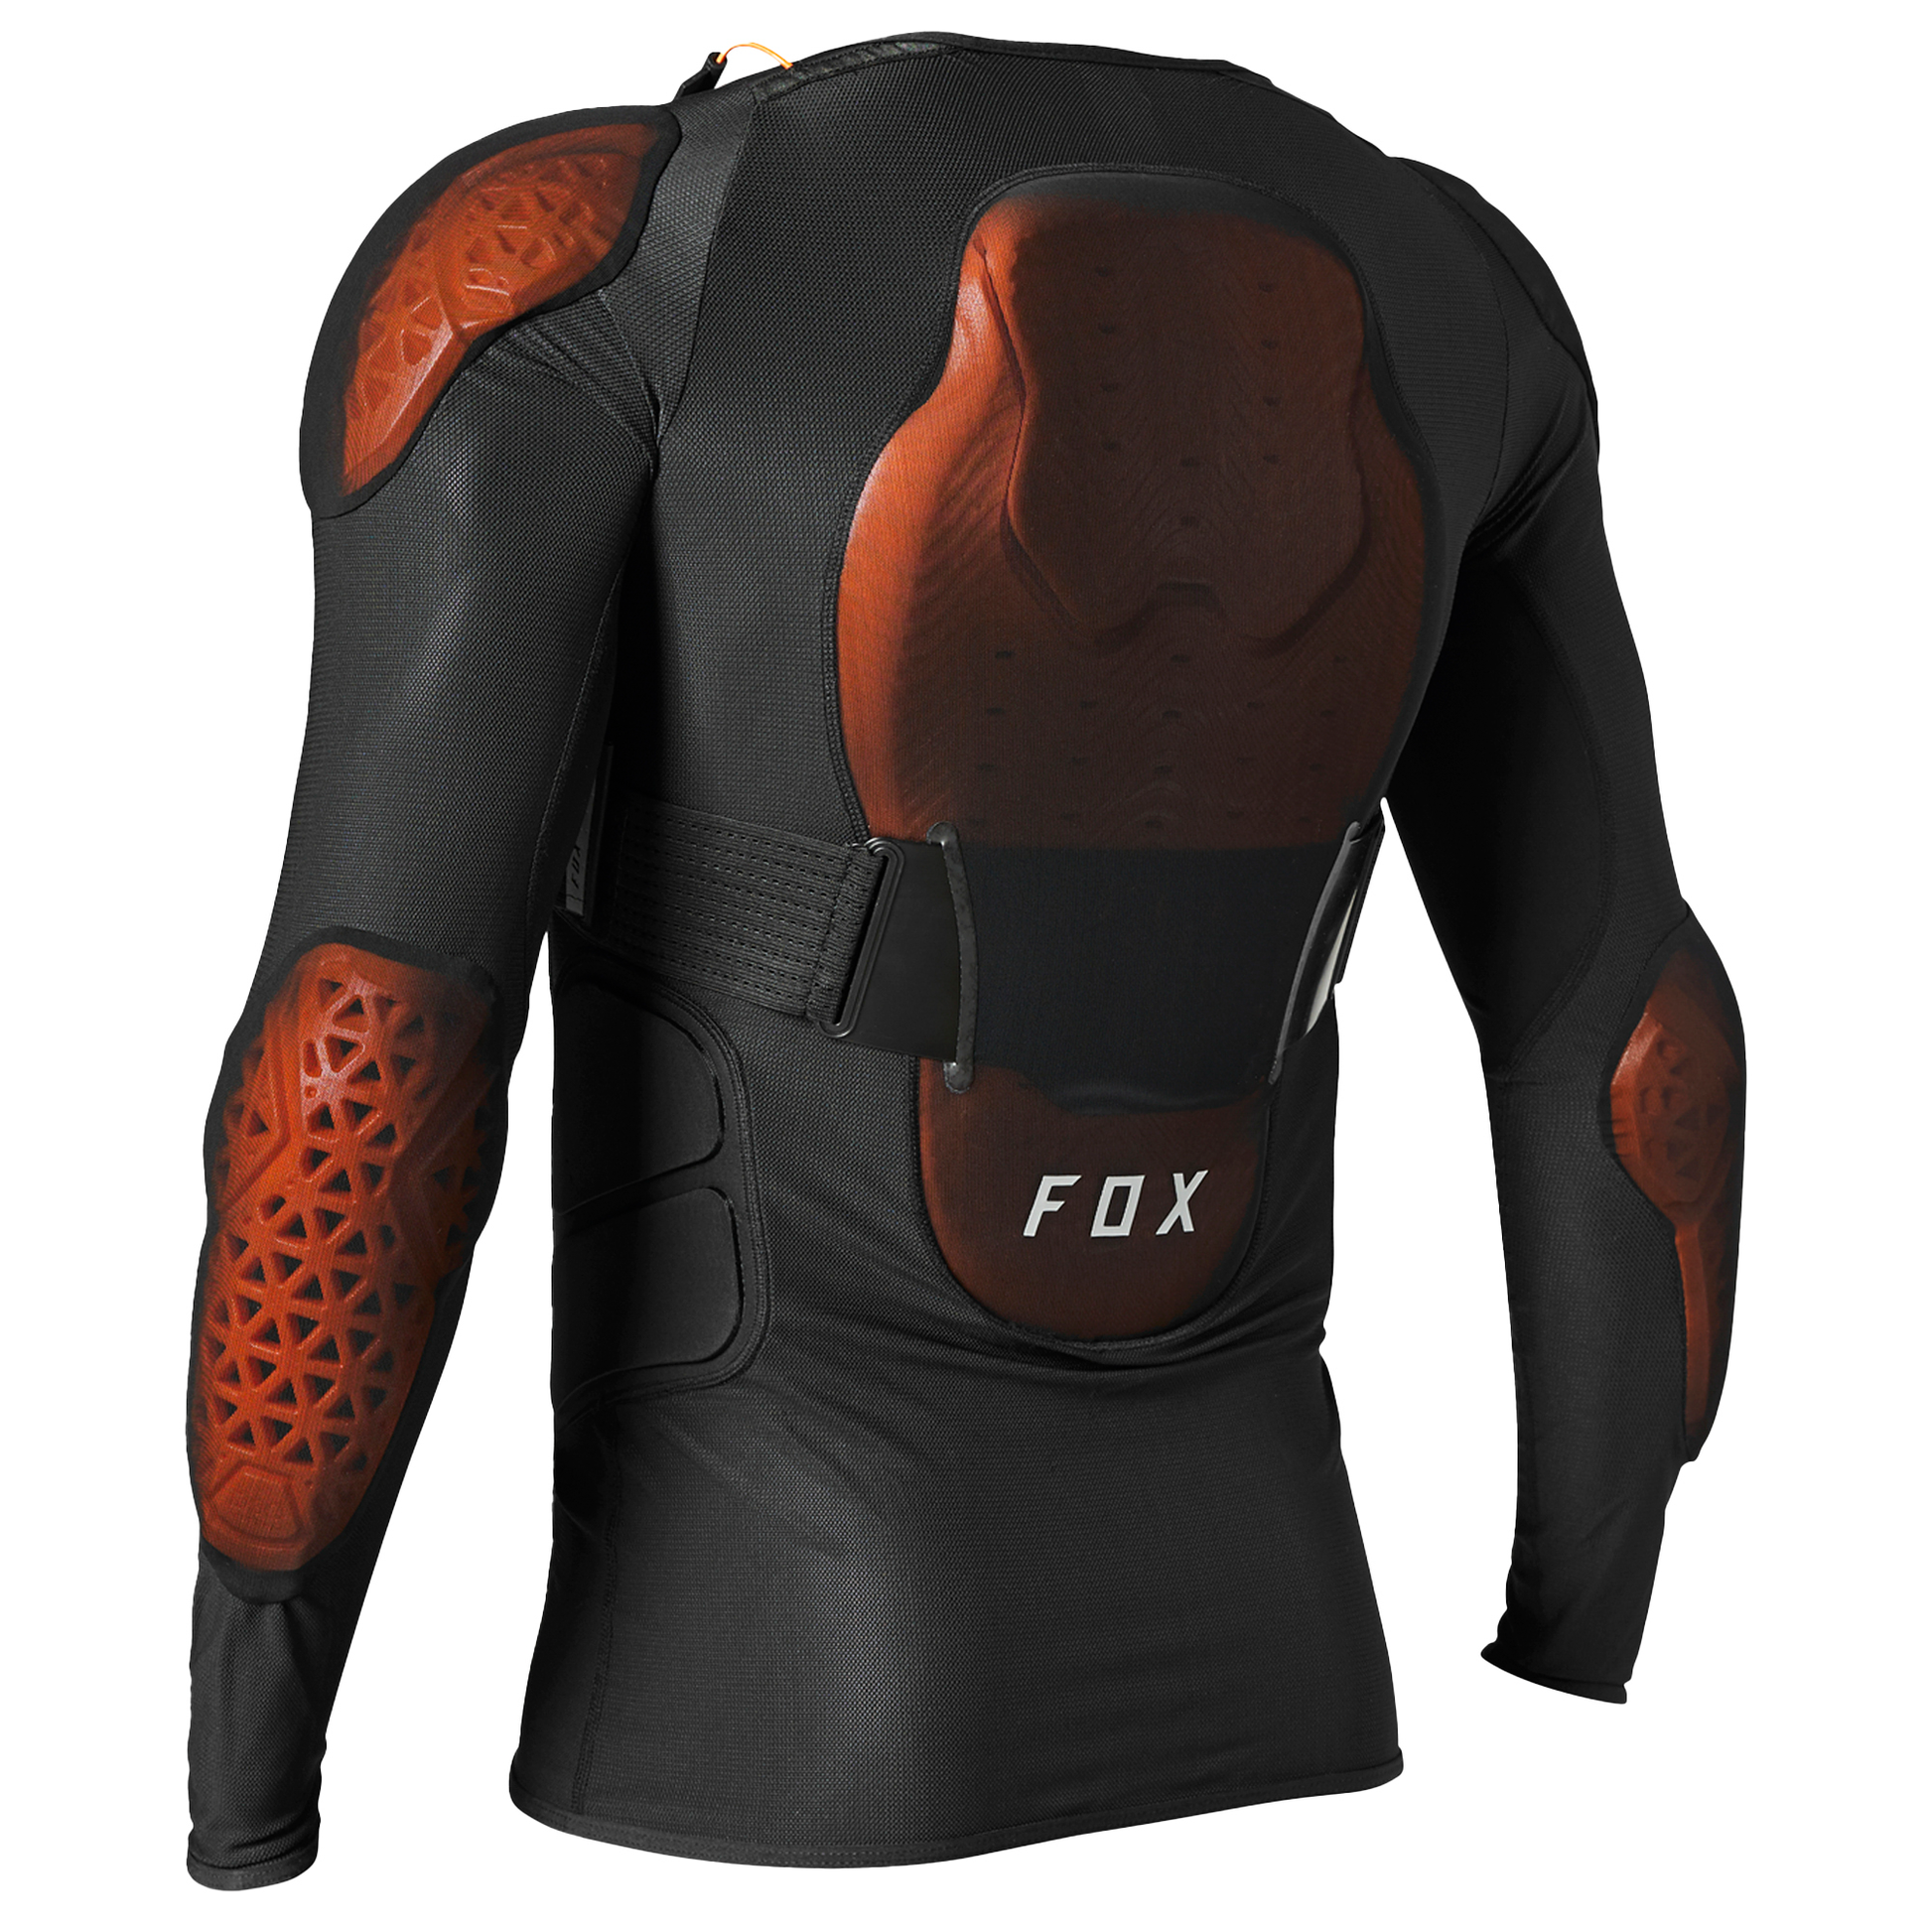 Fox Baseframe Pro D3O Protective Jacket - XL - Black - Image 2